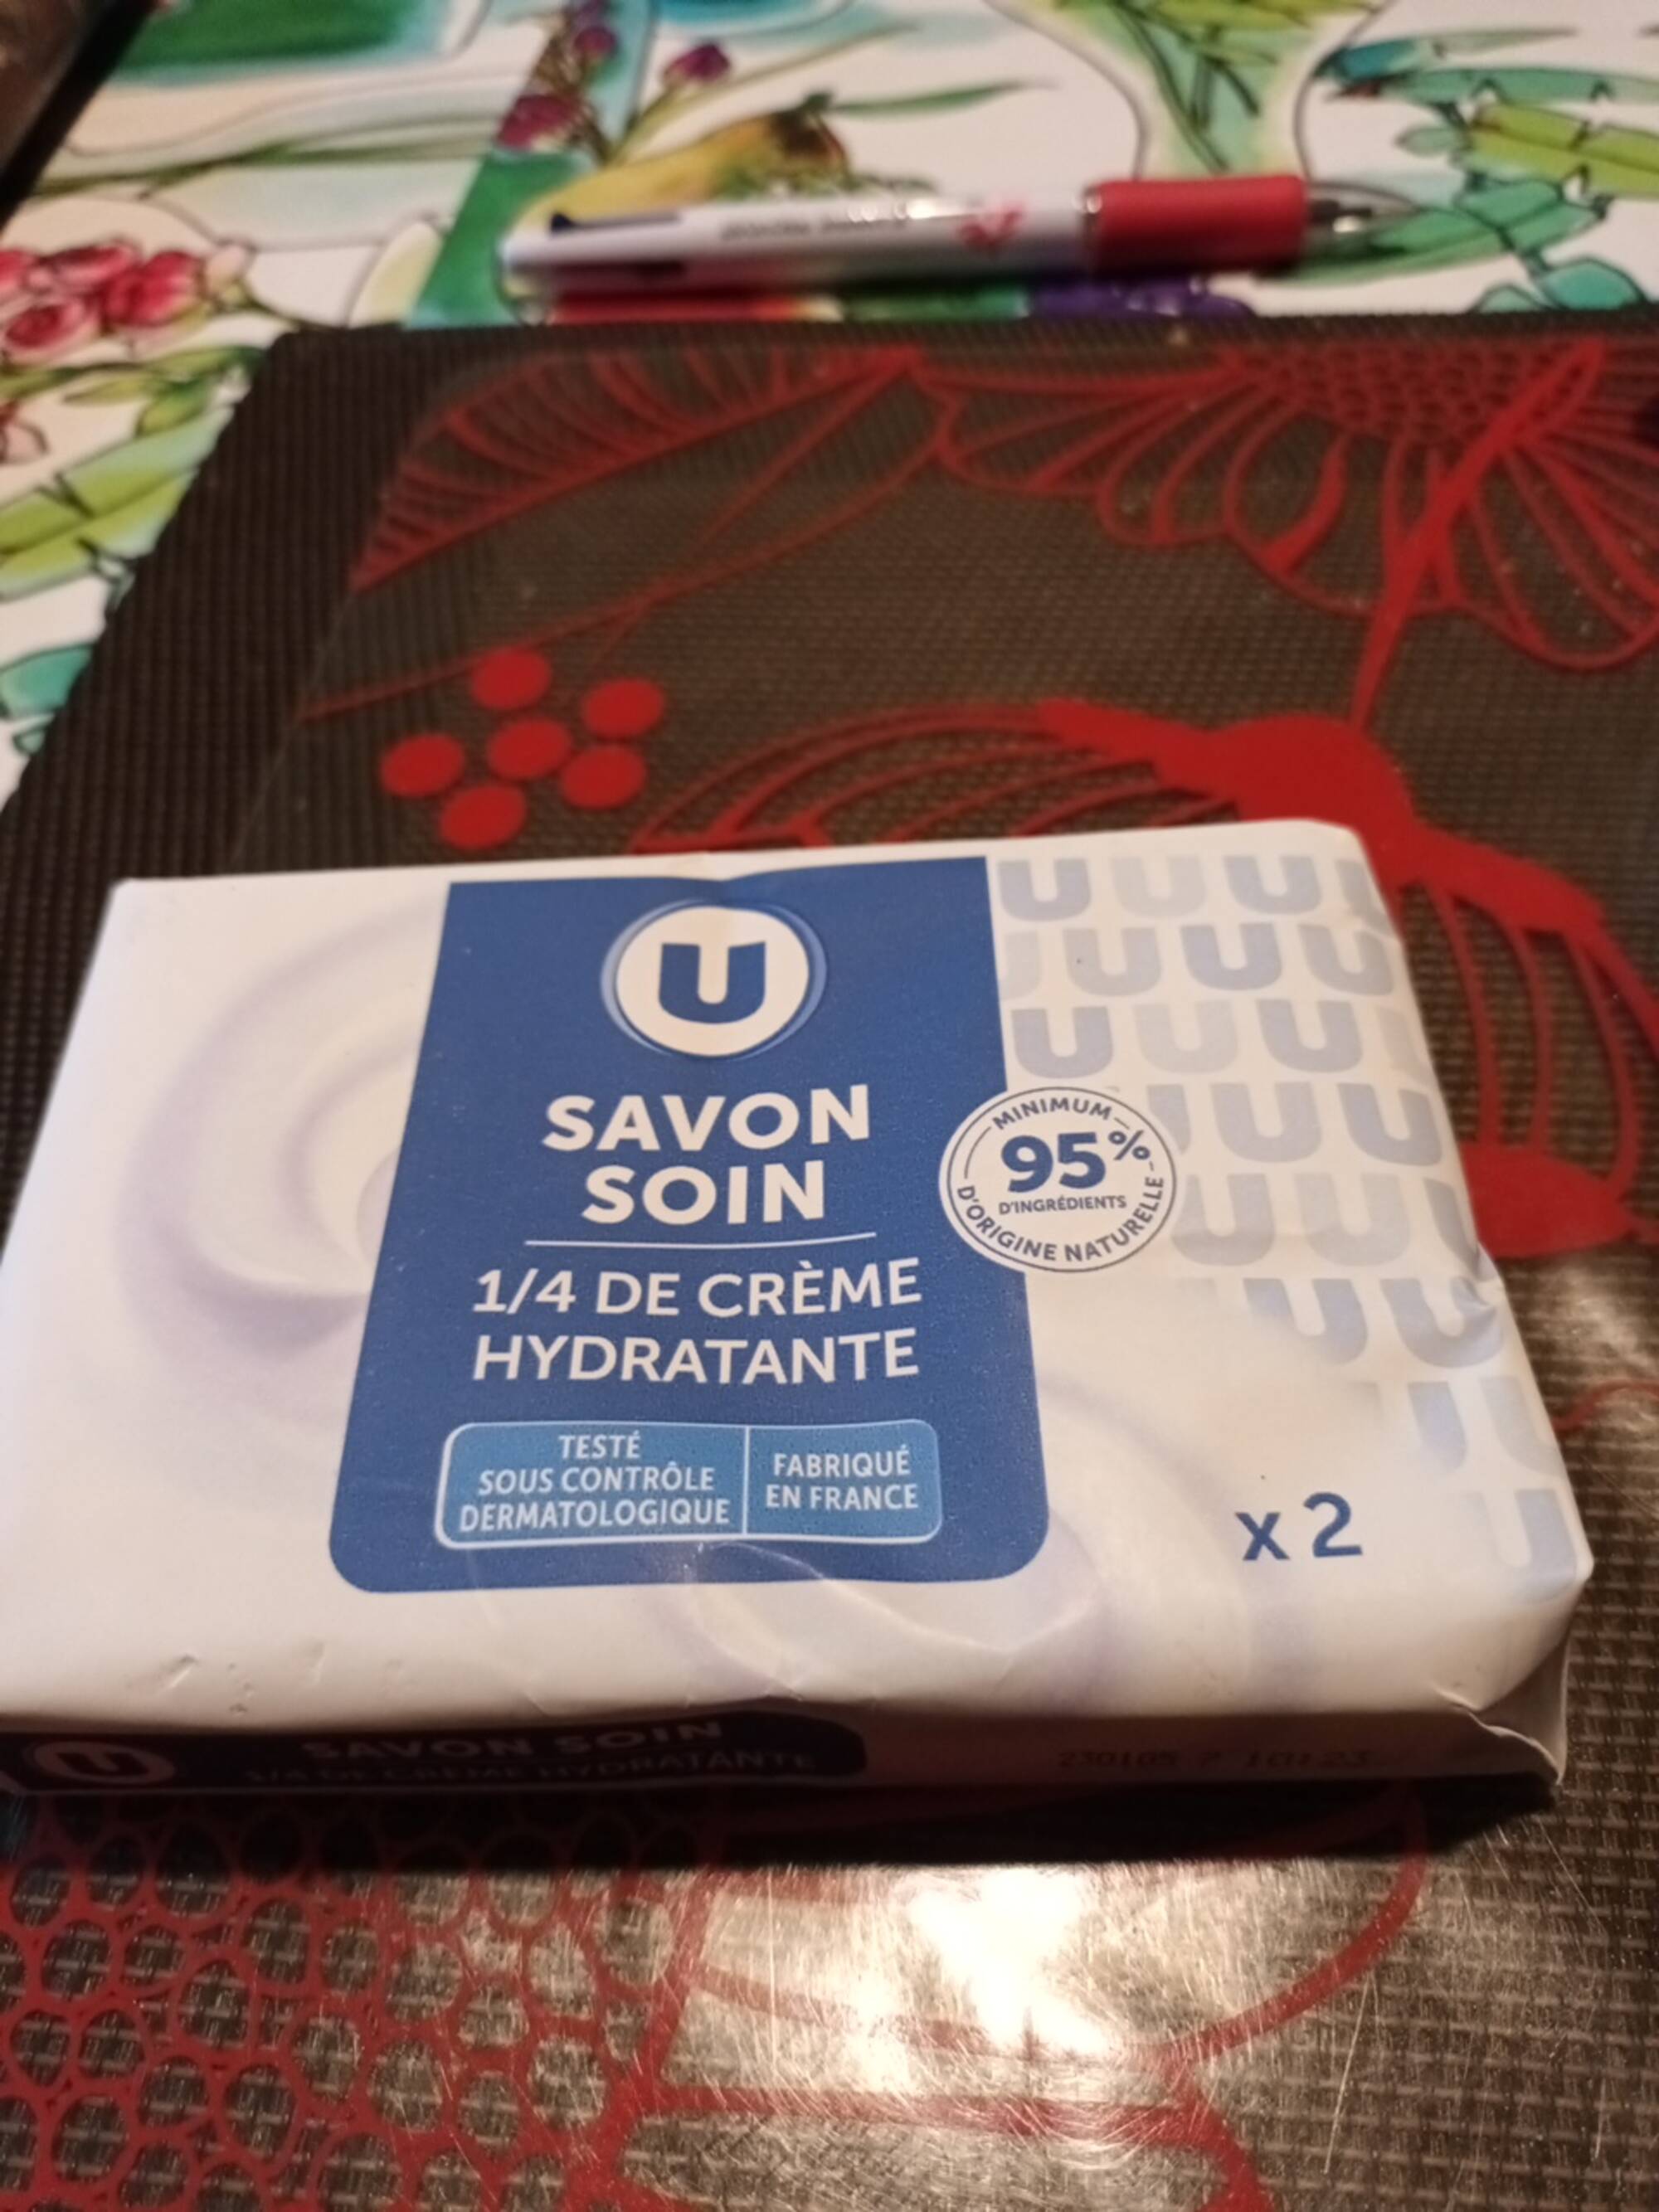 U - Savon soin - 1/4 de crème hydratante 